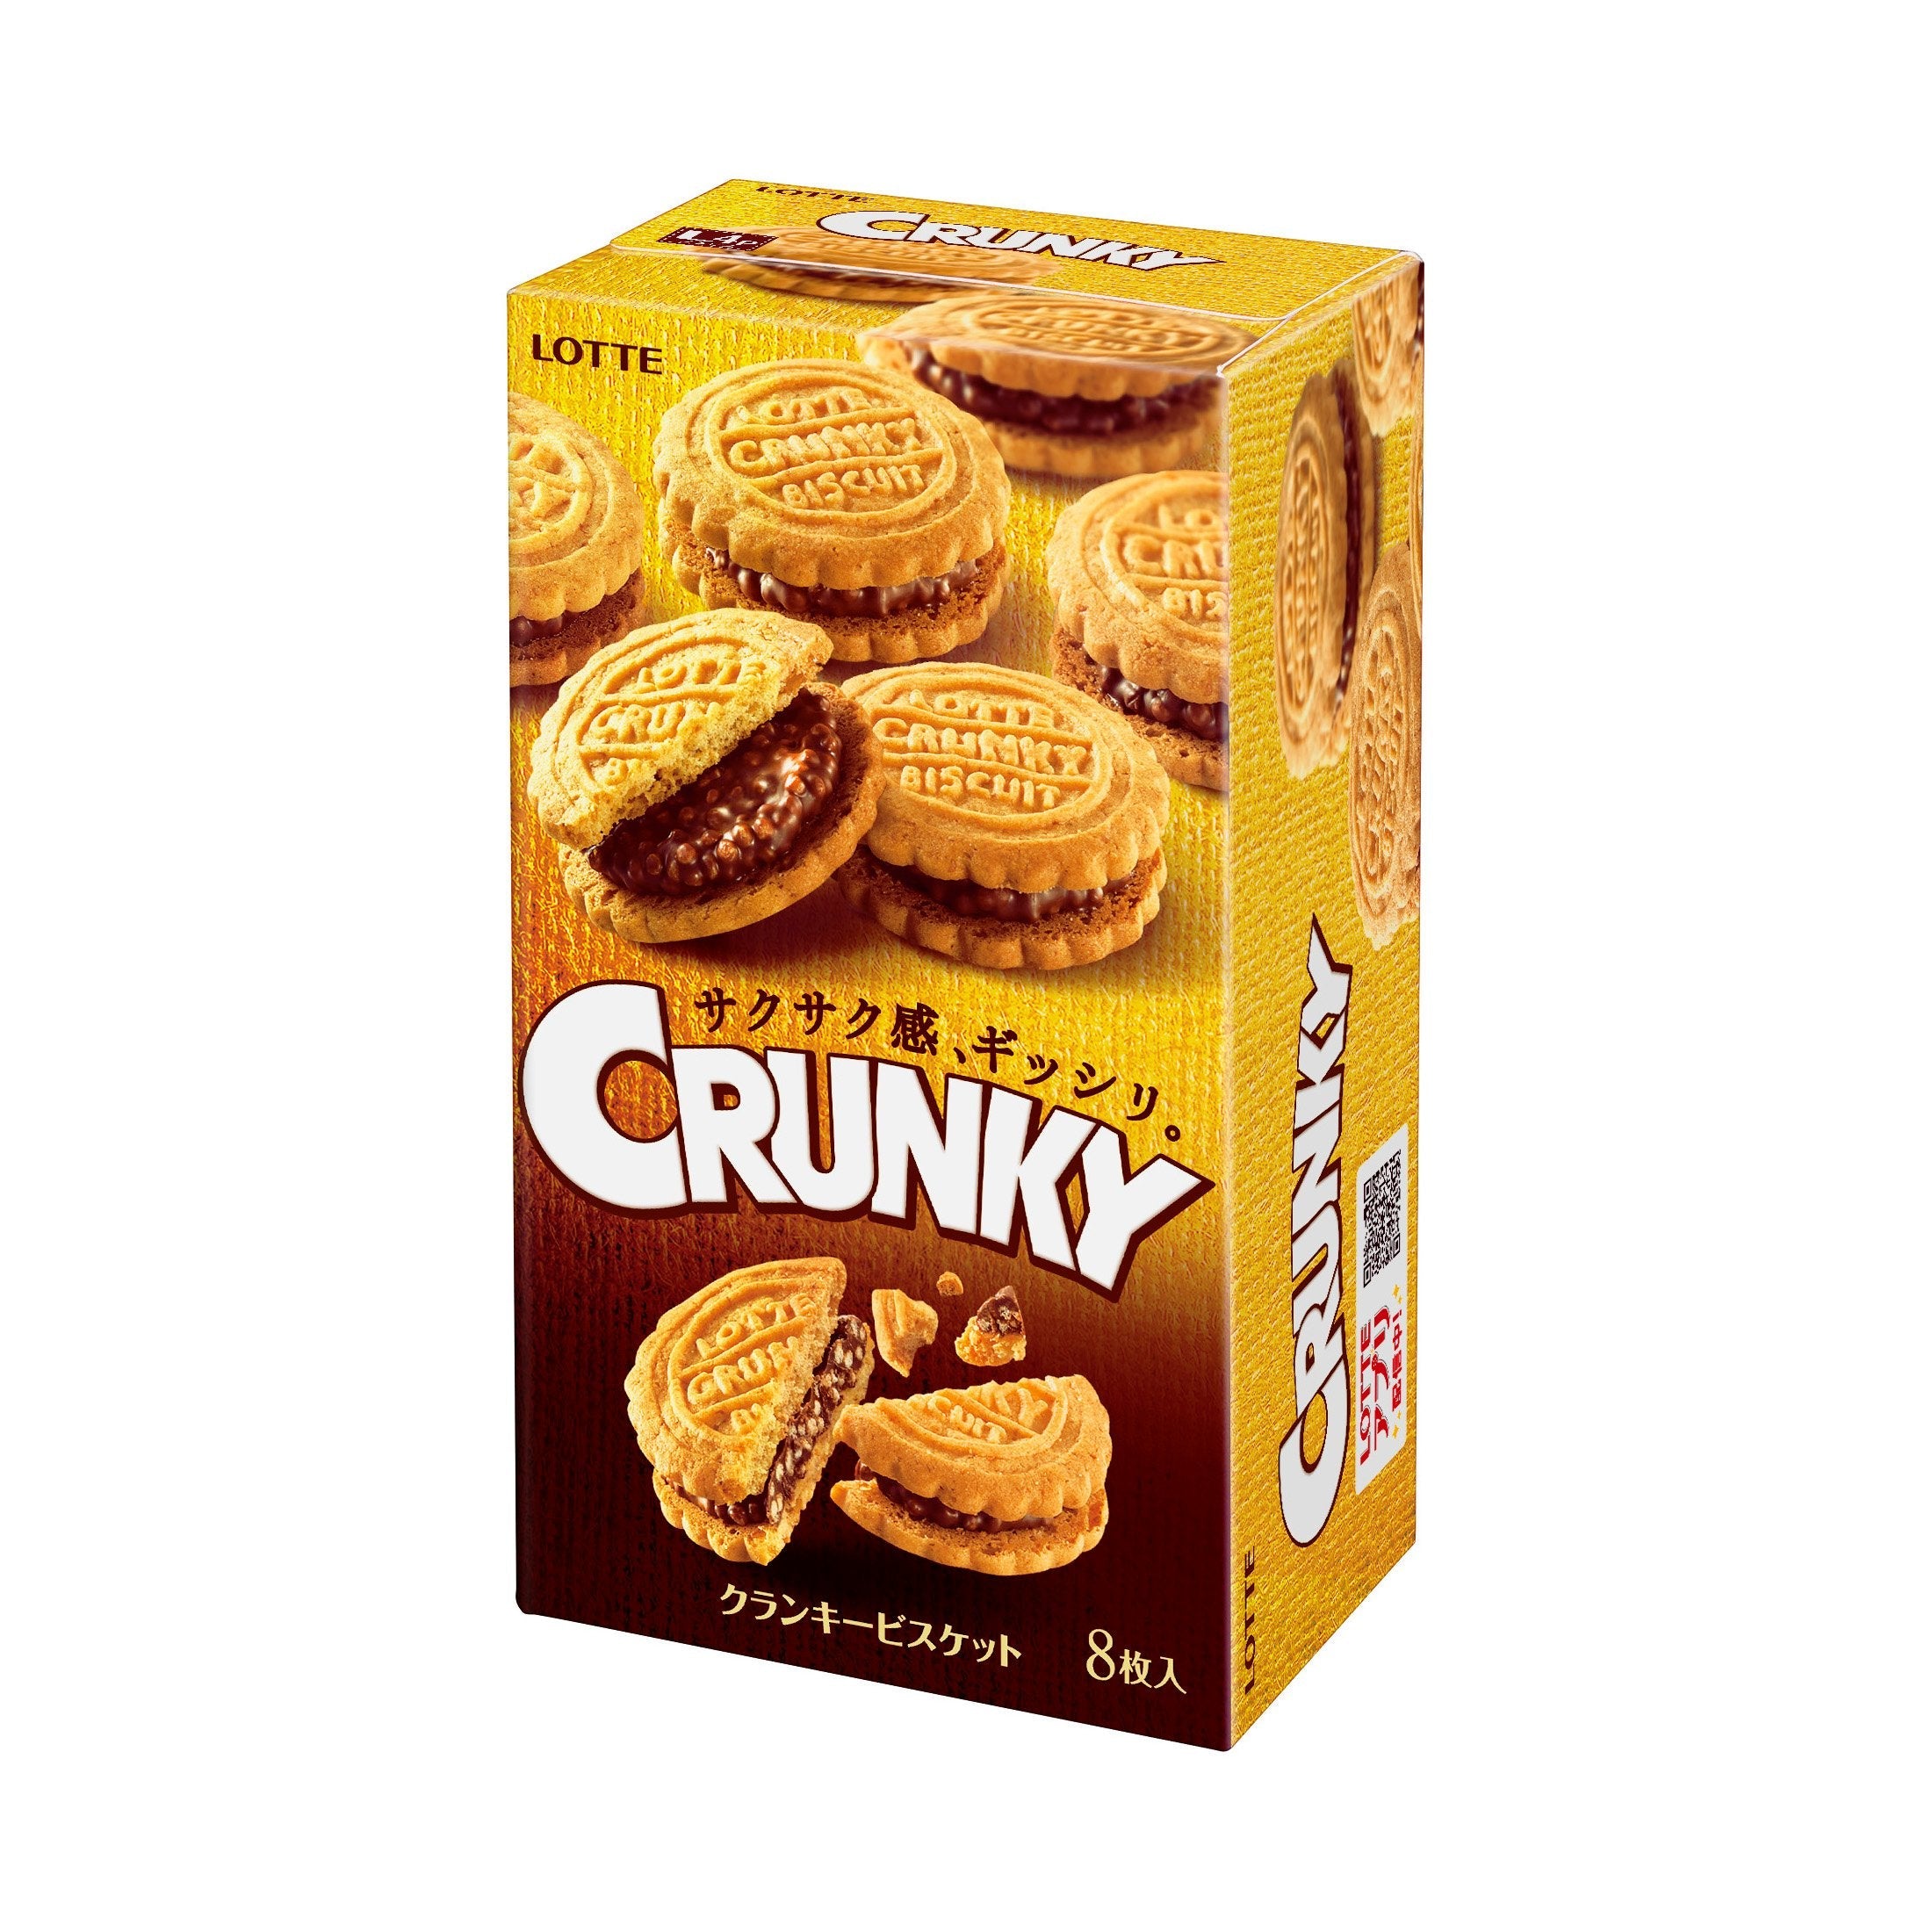 Lotte Crunky Crispy Chocolate Sandwich Cookies (Pack of 5)